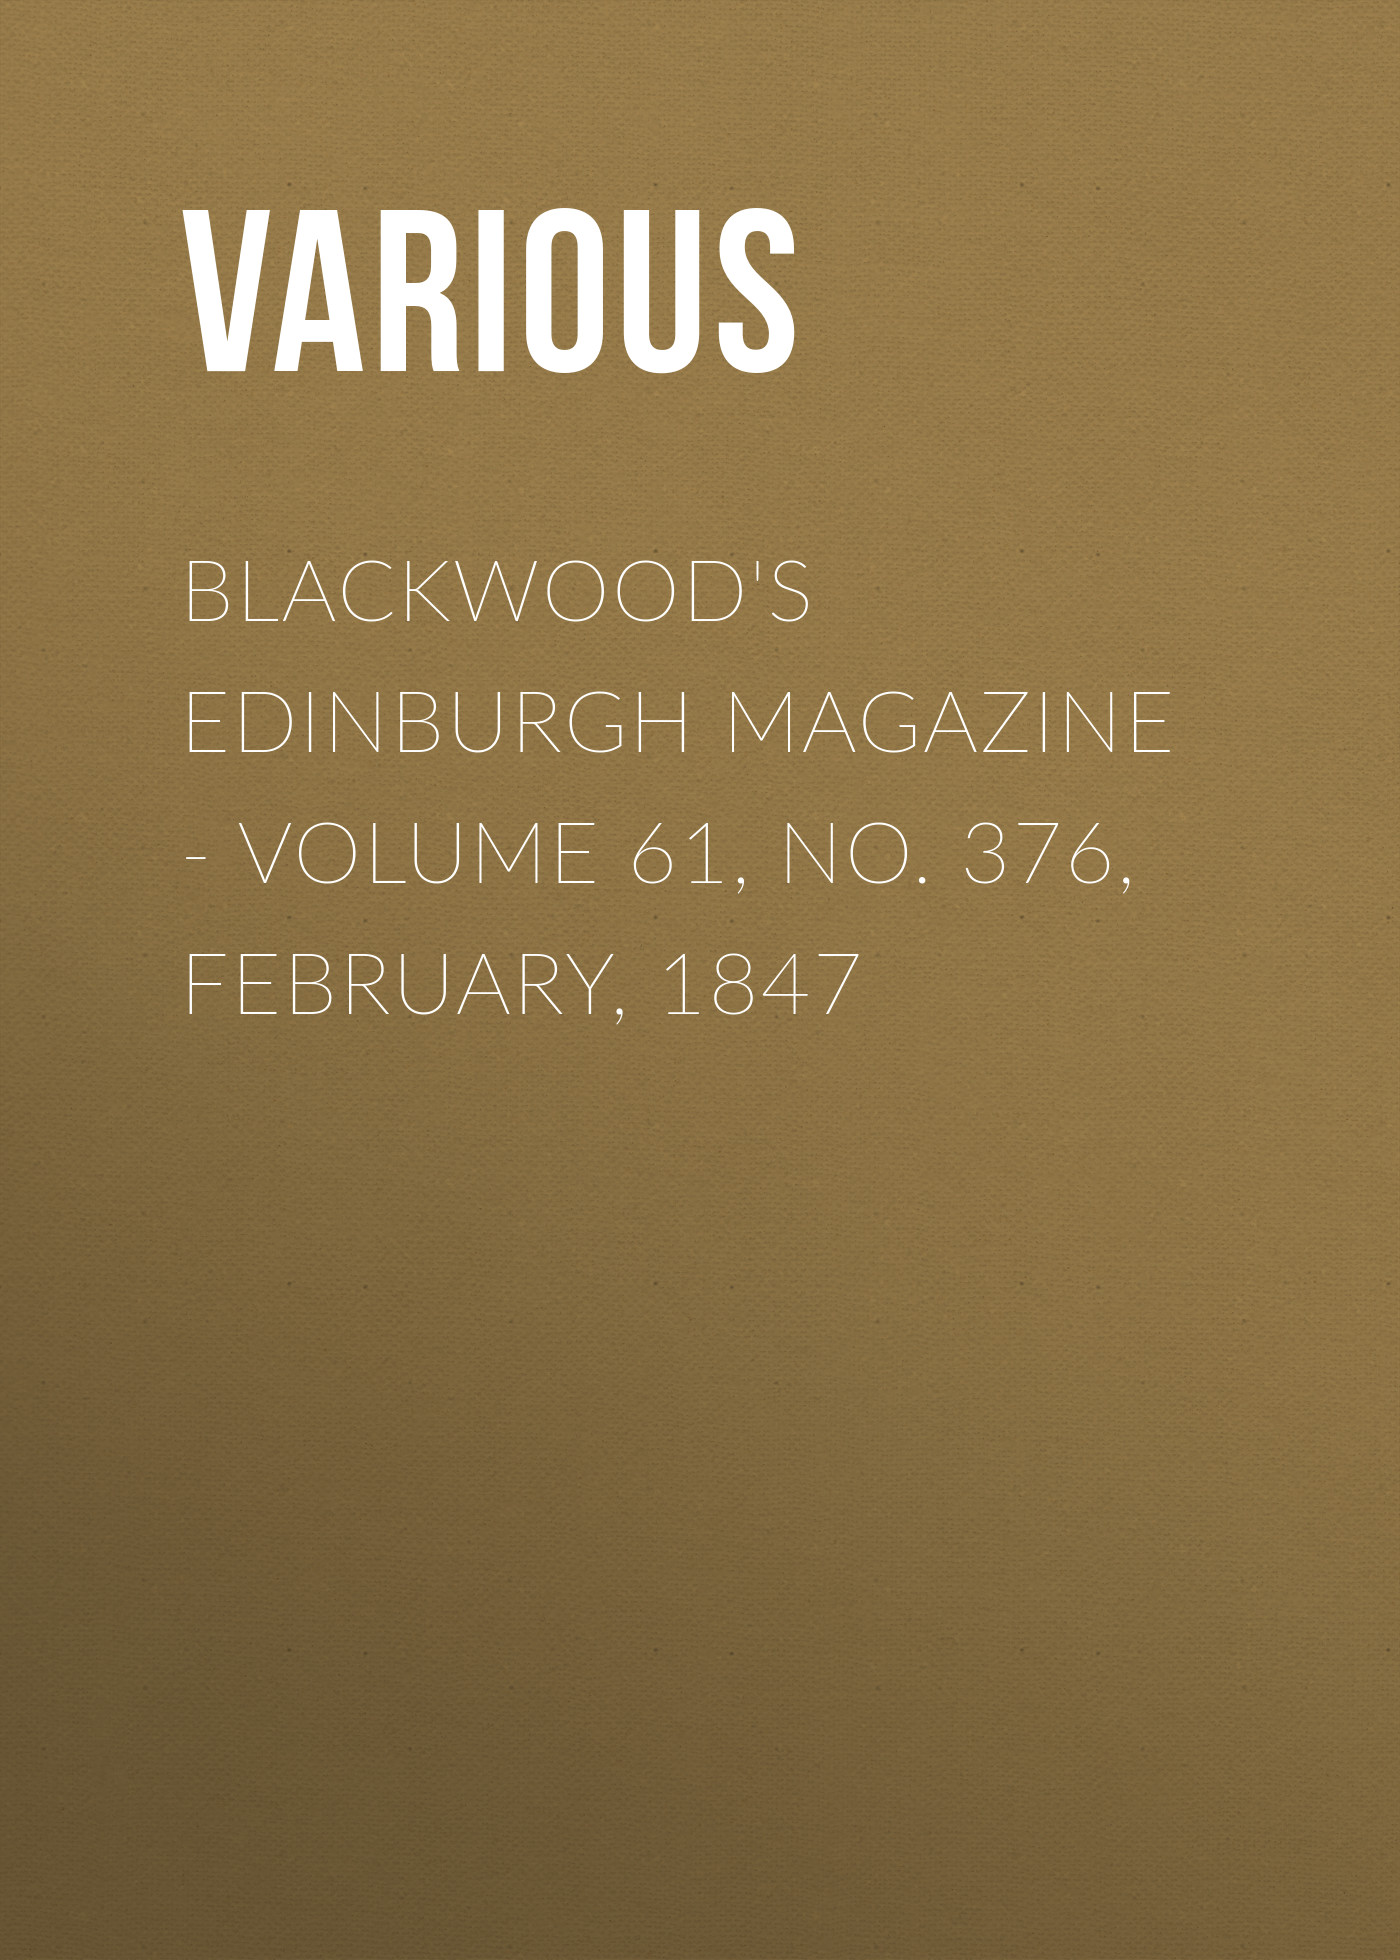 Various Blackwood's Edinburgh Magazine - Volume 61, No. 376, February, 1847